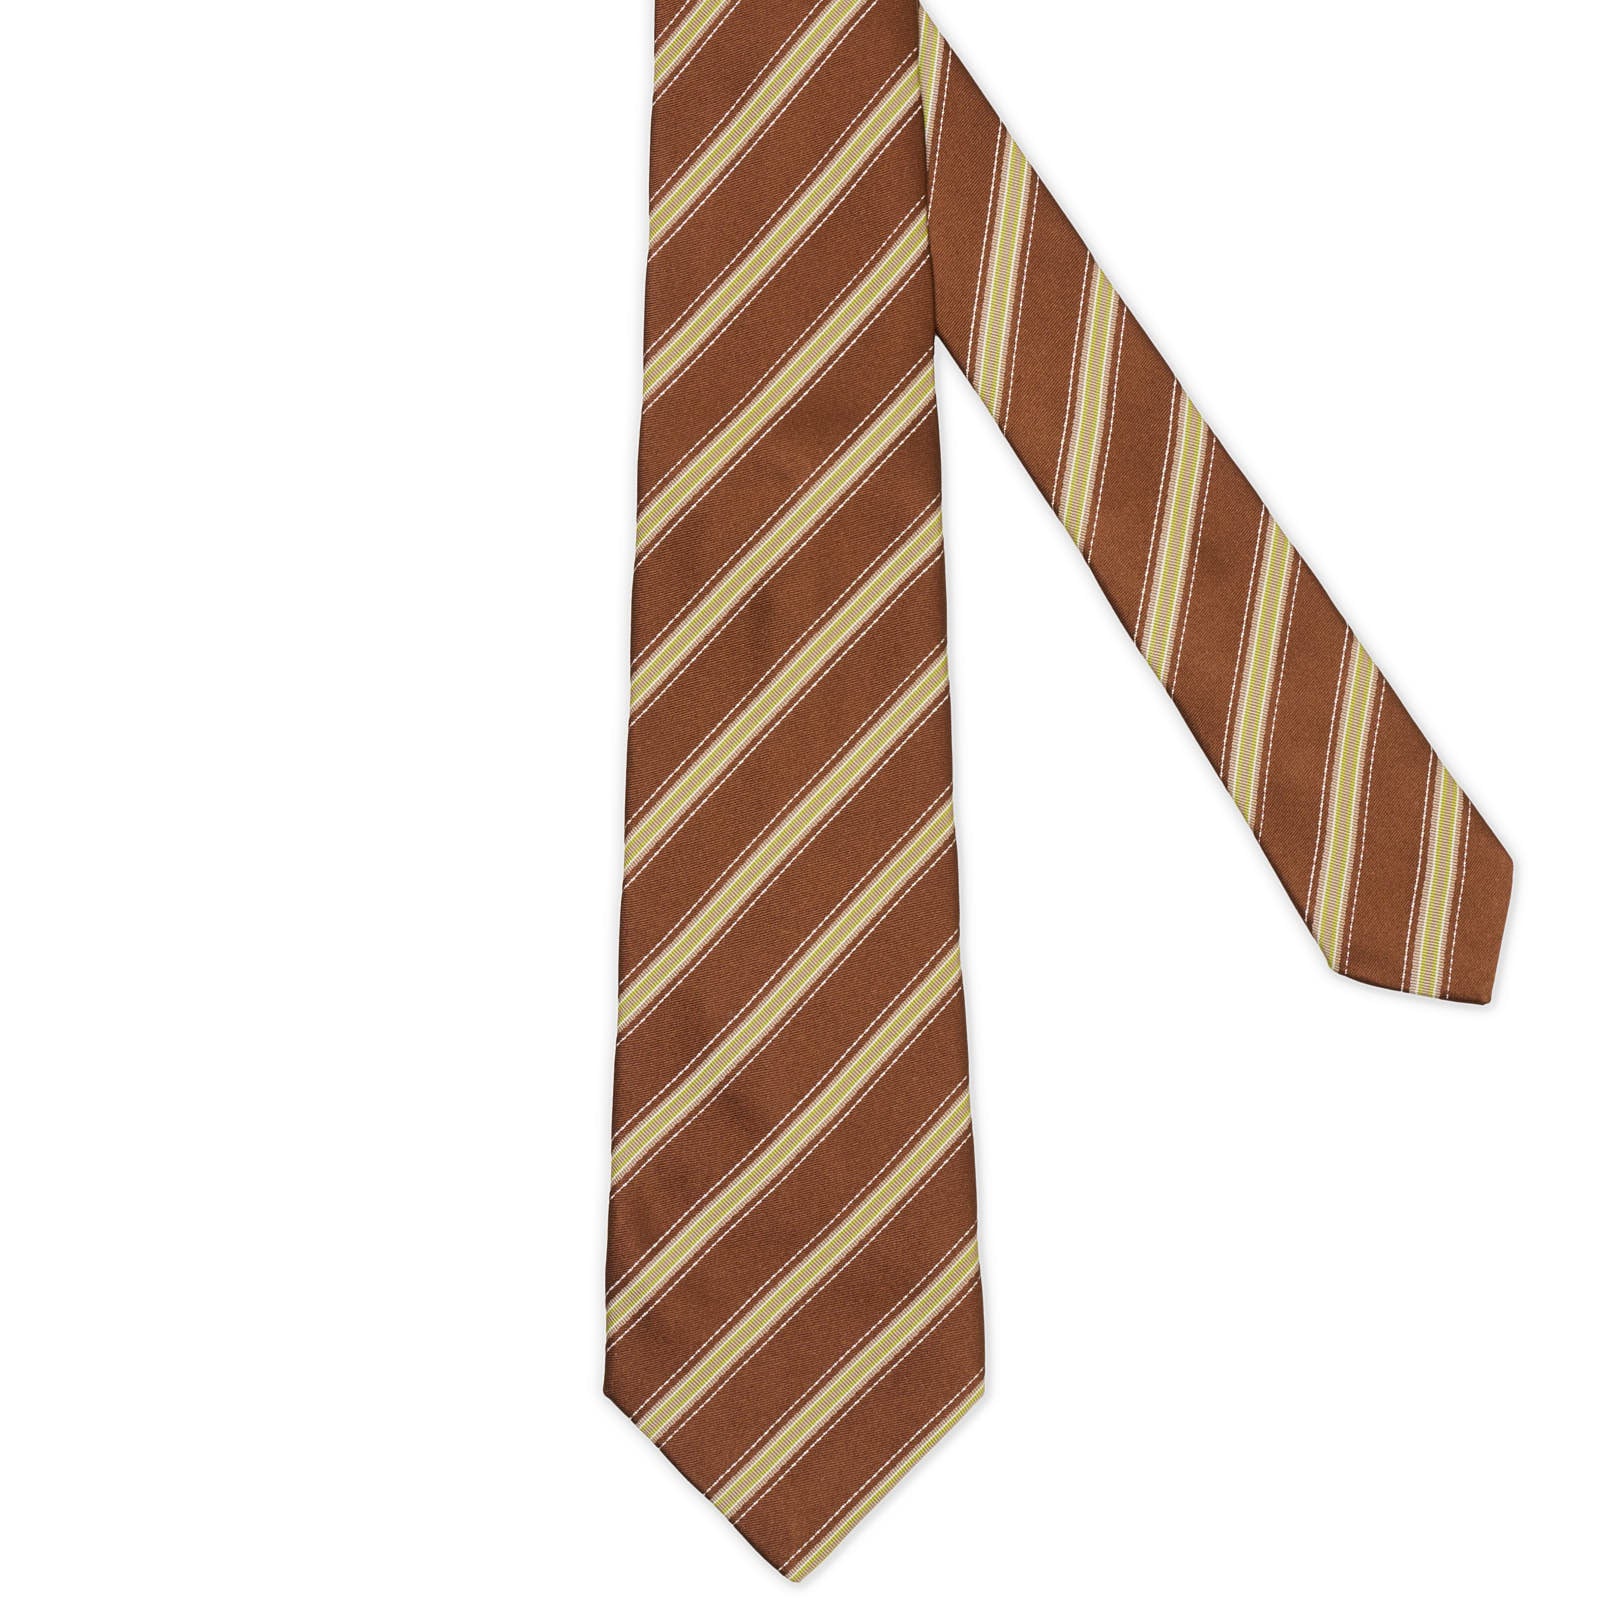 MATTABISCH for VANNUCCI Brown and Green Diagonal Striped Silk Seven Fold Tie NEW